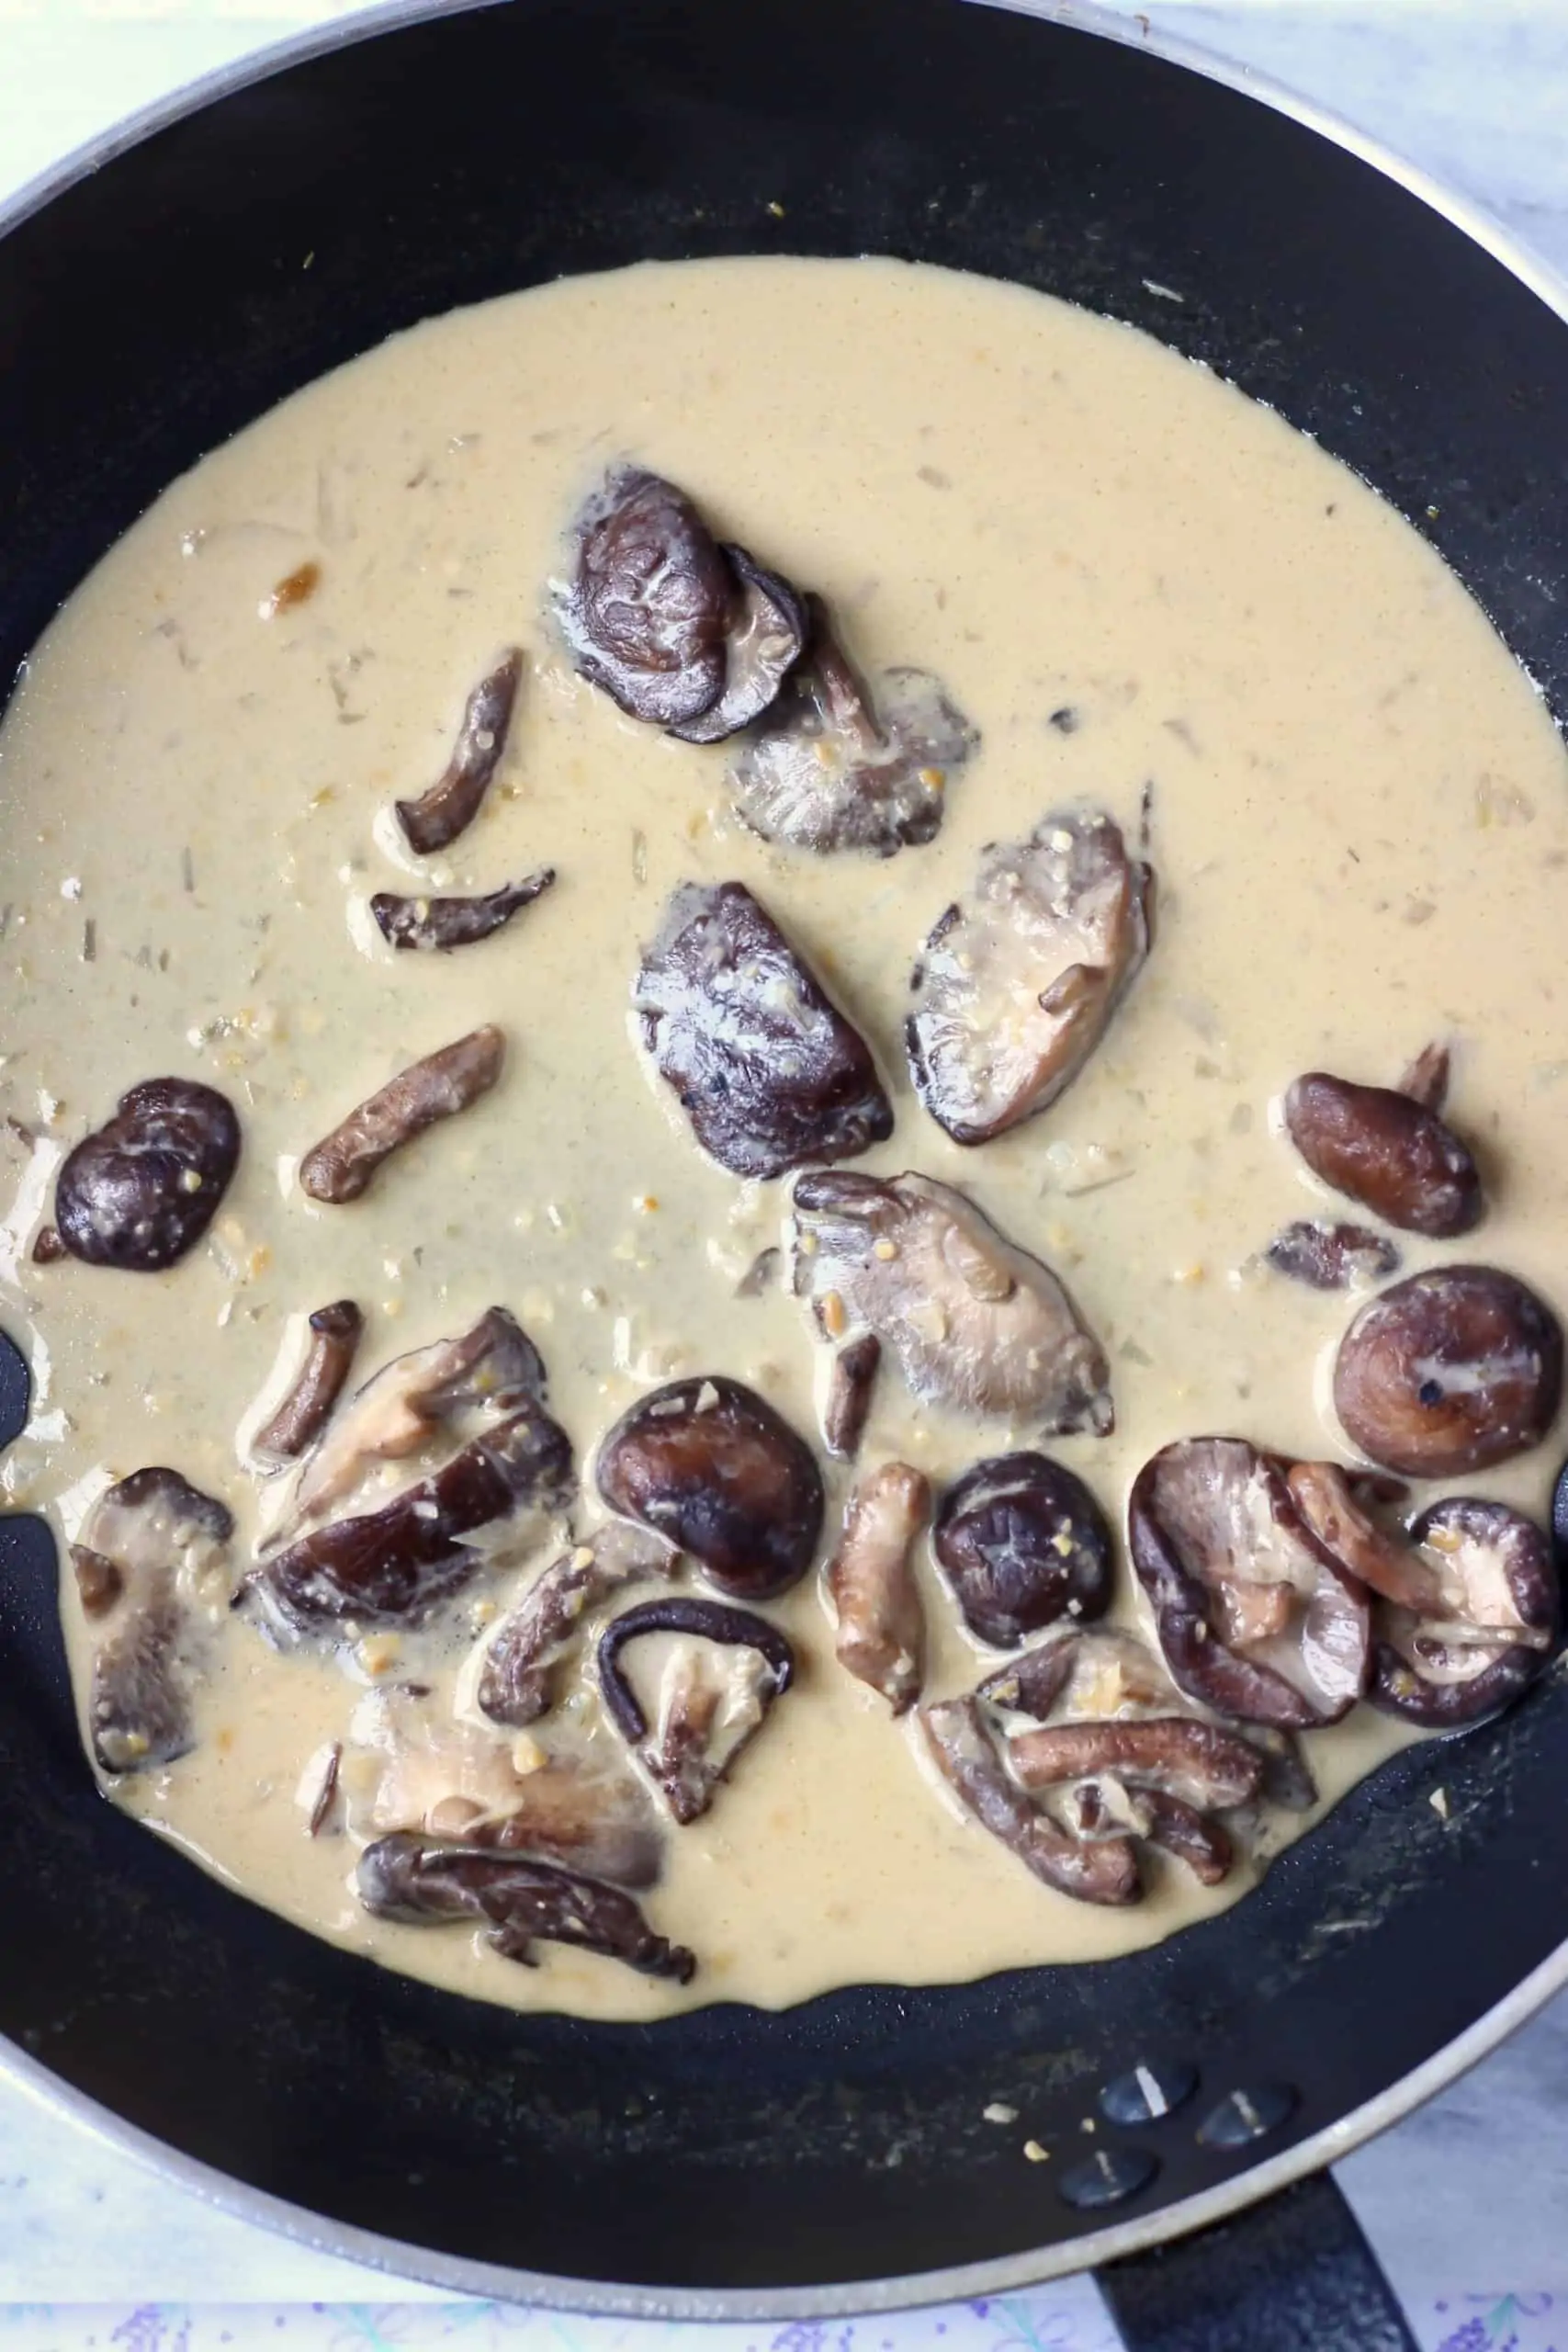 Garlic, shiitake mushrooms, almond milk and miso in a black frying pan